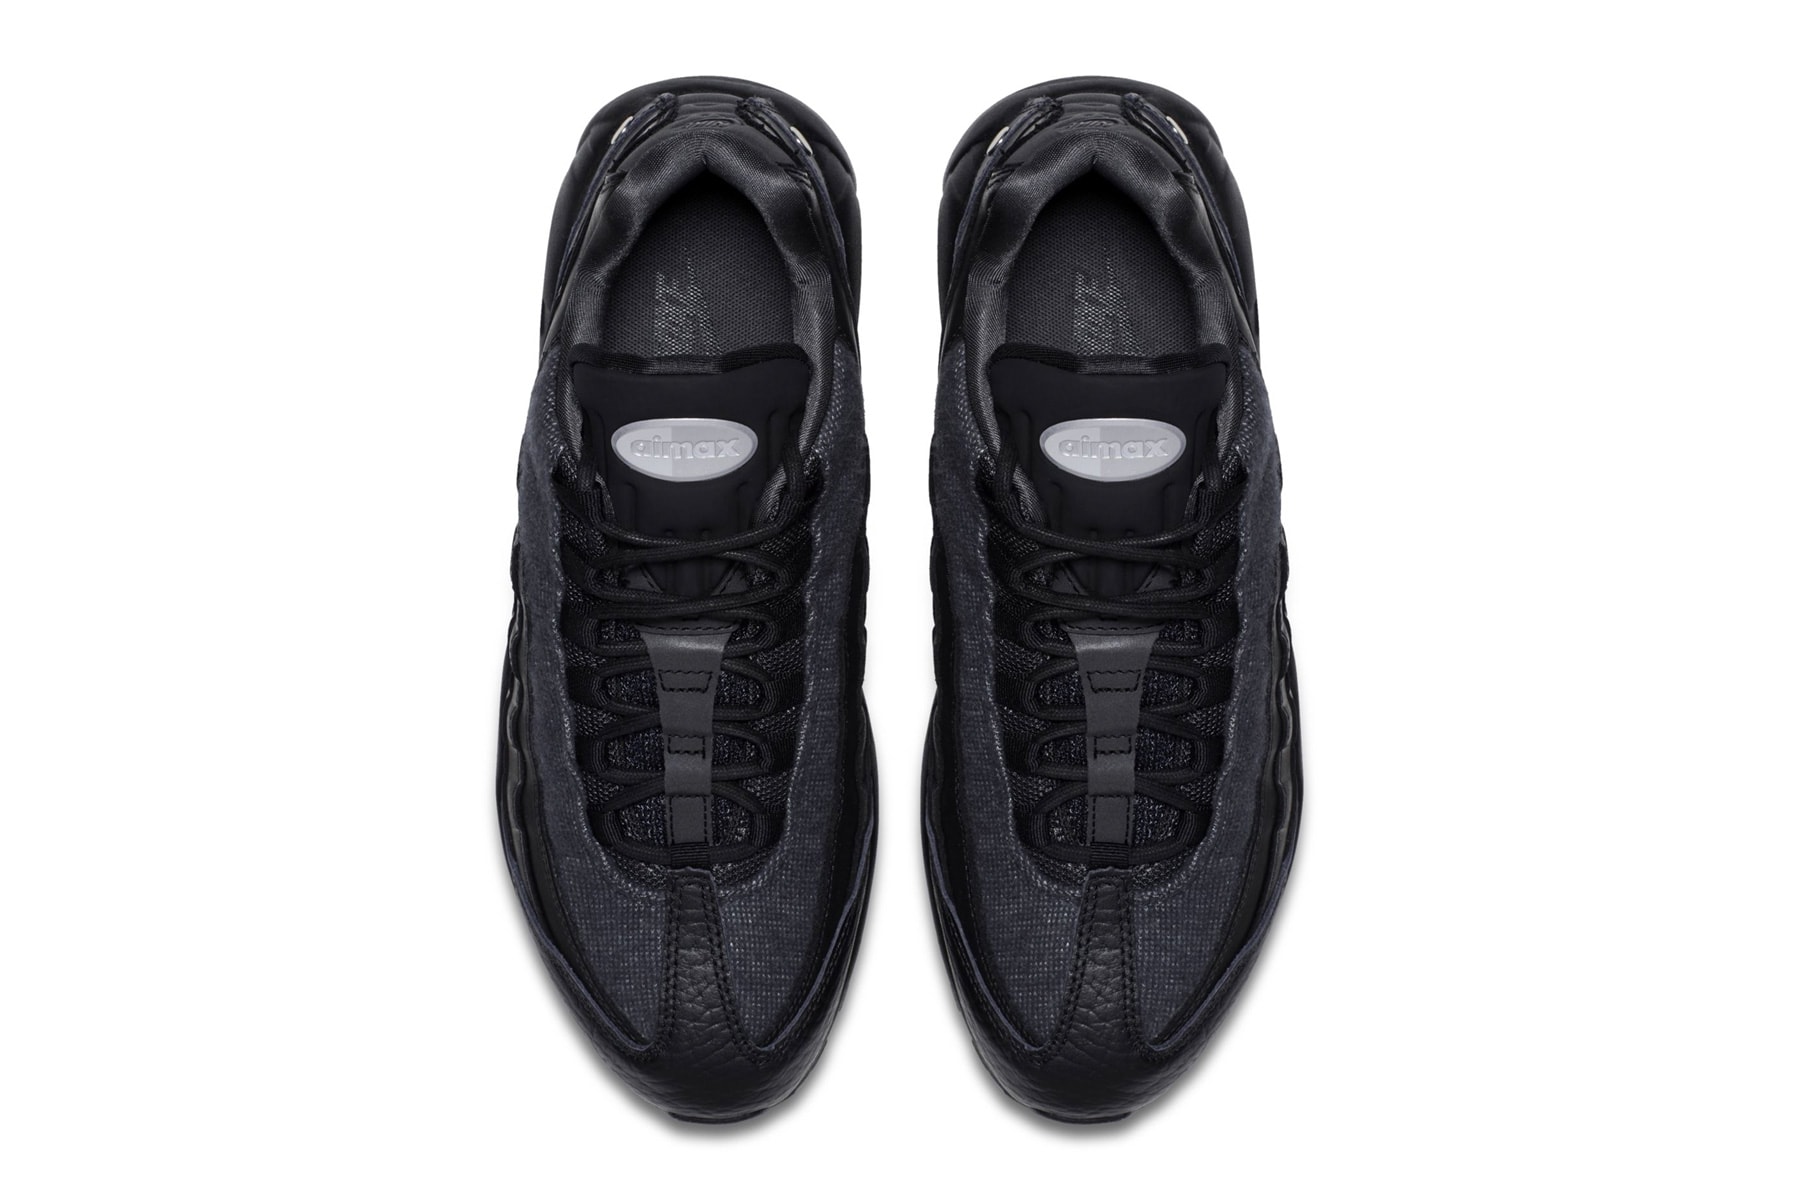 Nike Air Max 95 NRG Black anthracite Grey Wool Colorway release date sneaker first look kicks price